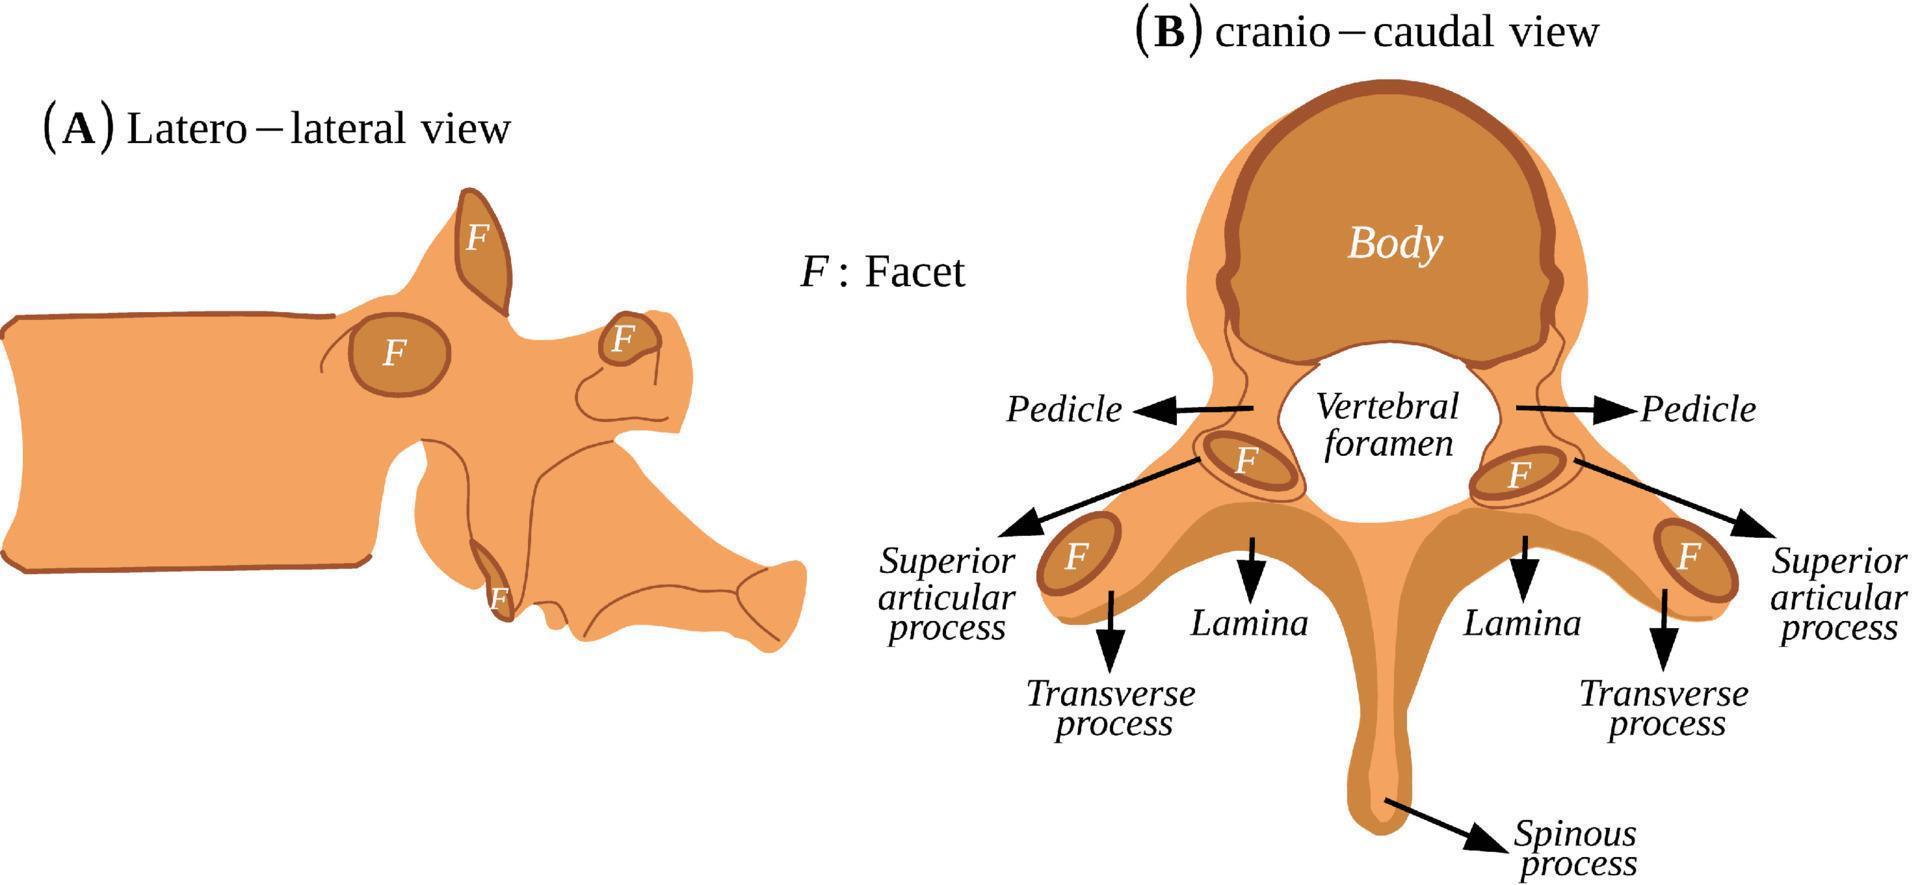 vértebra típica da coluna humana vetor